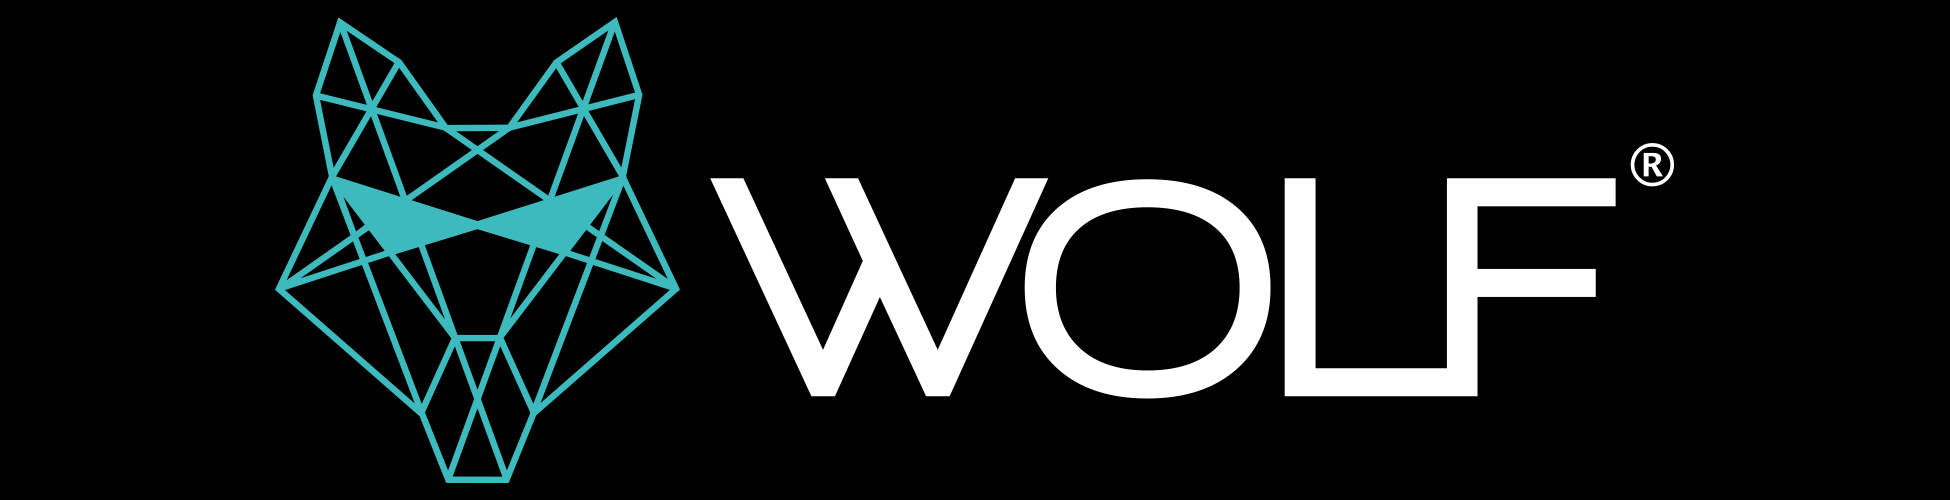 wolf int logo